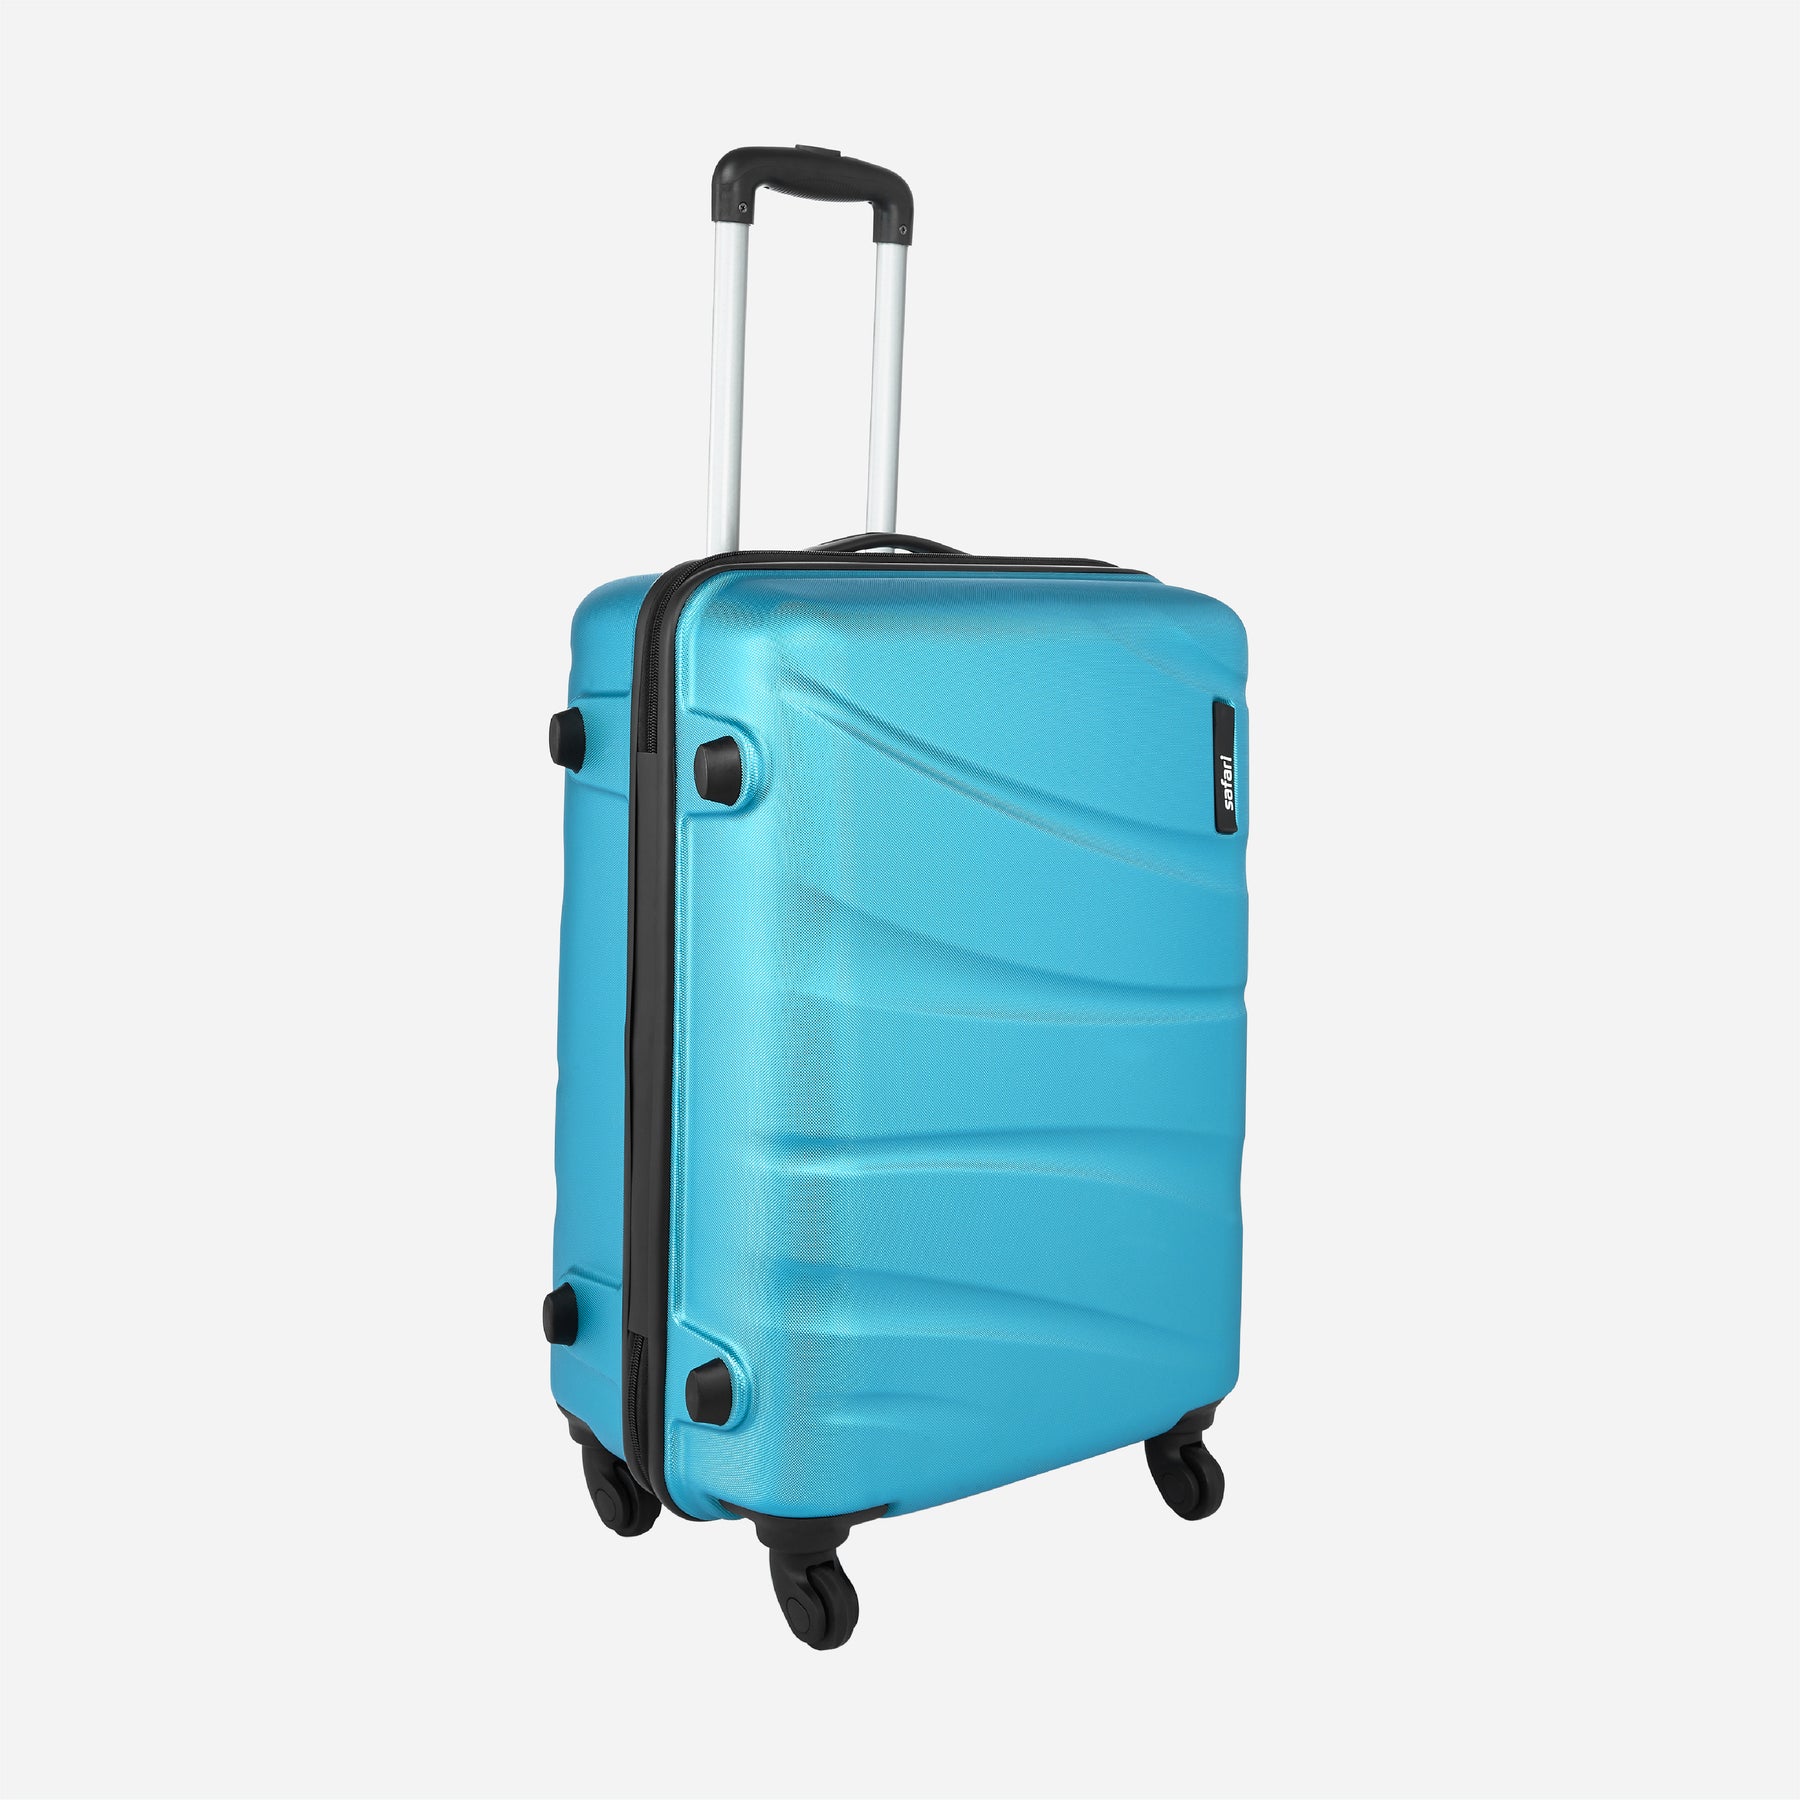 Flo Secure Hard Luggage and Basic Neck Pillow Combo - Blue